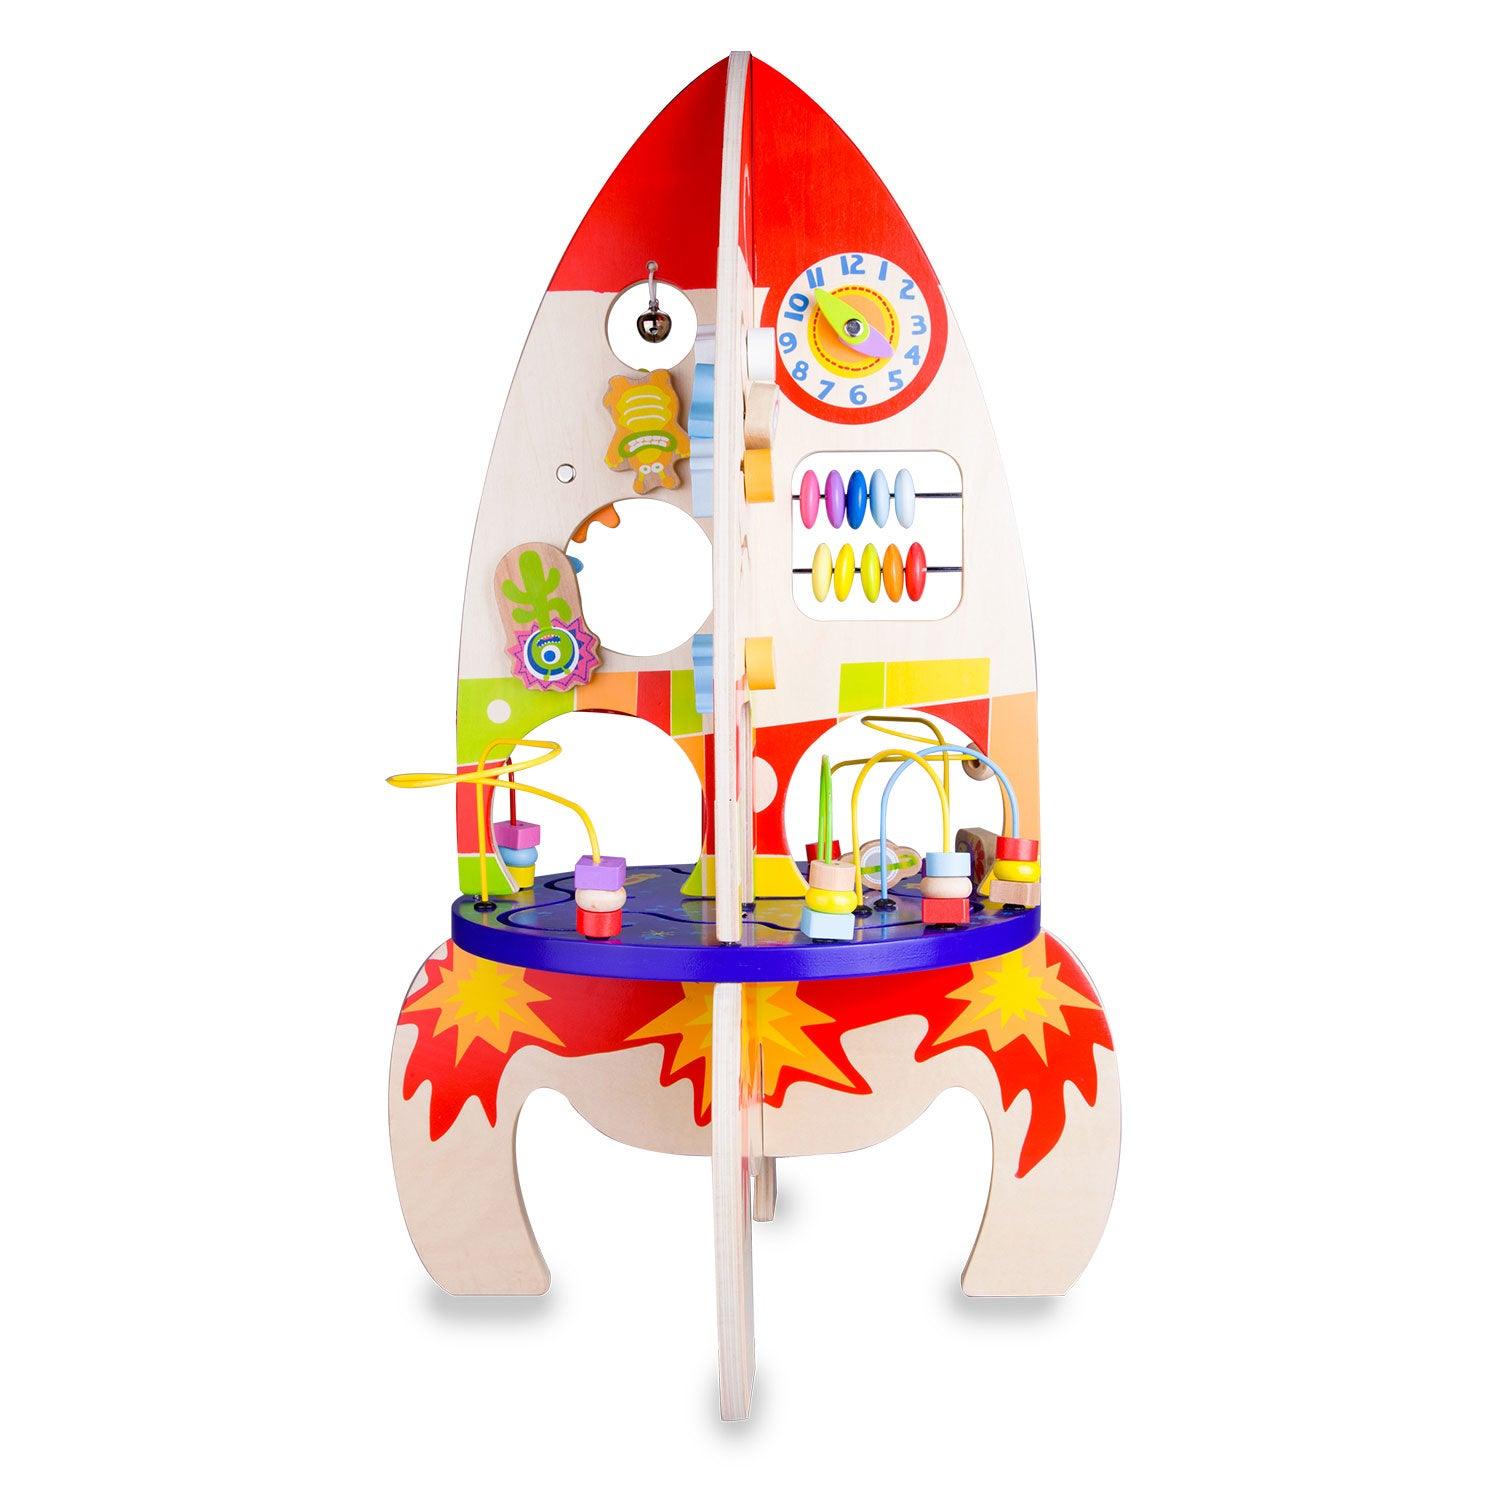 Rocket toy - MoonyBoon